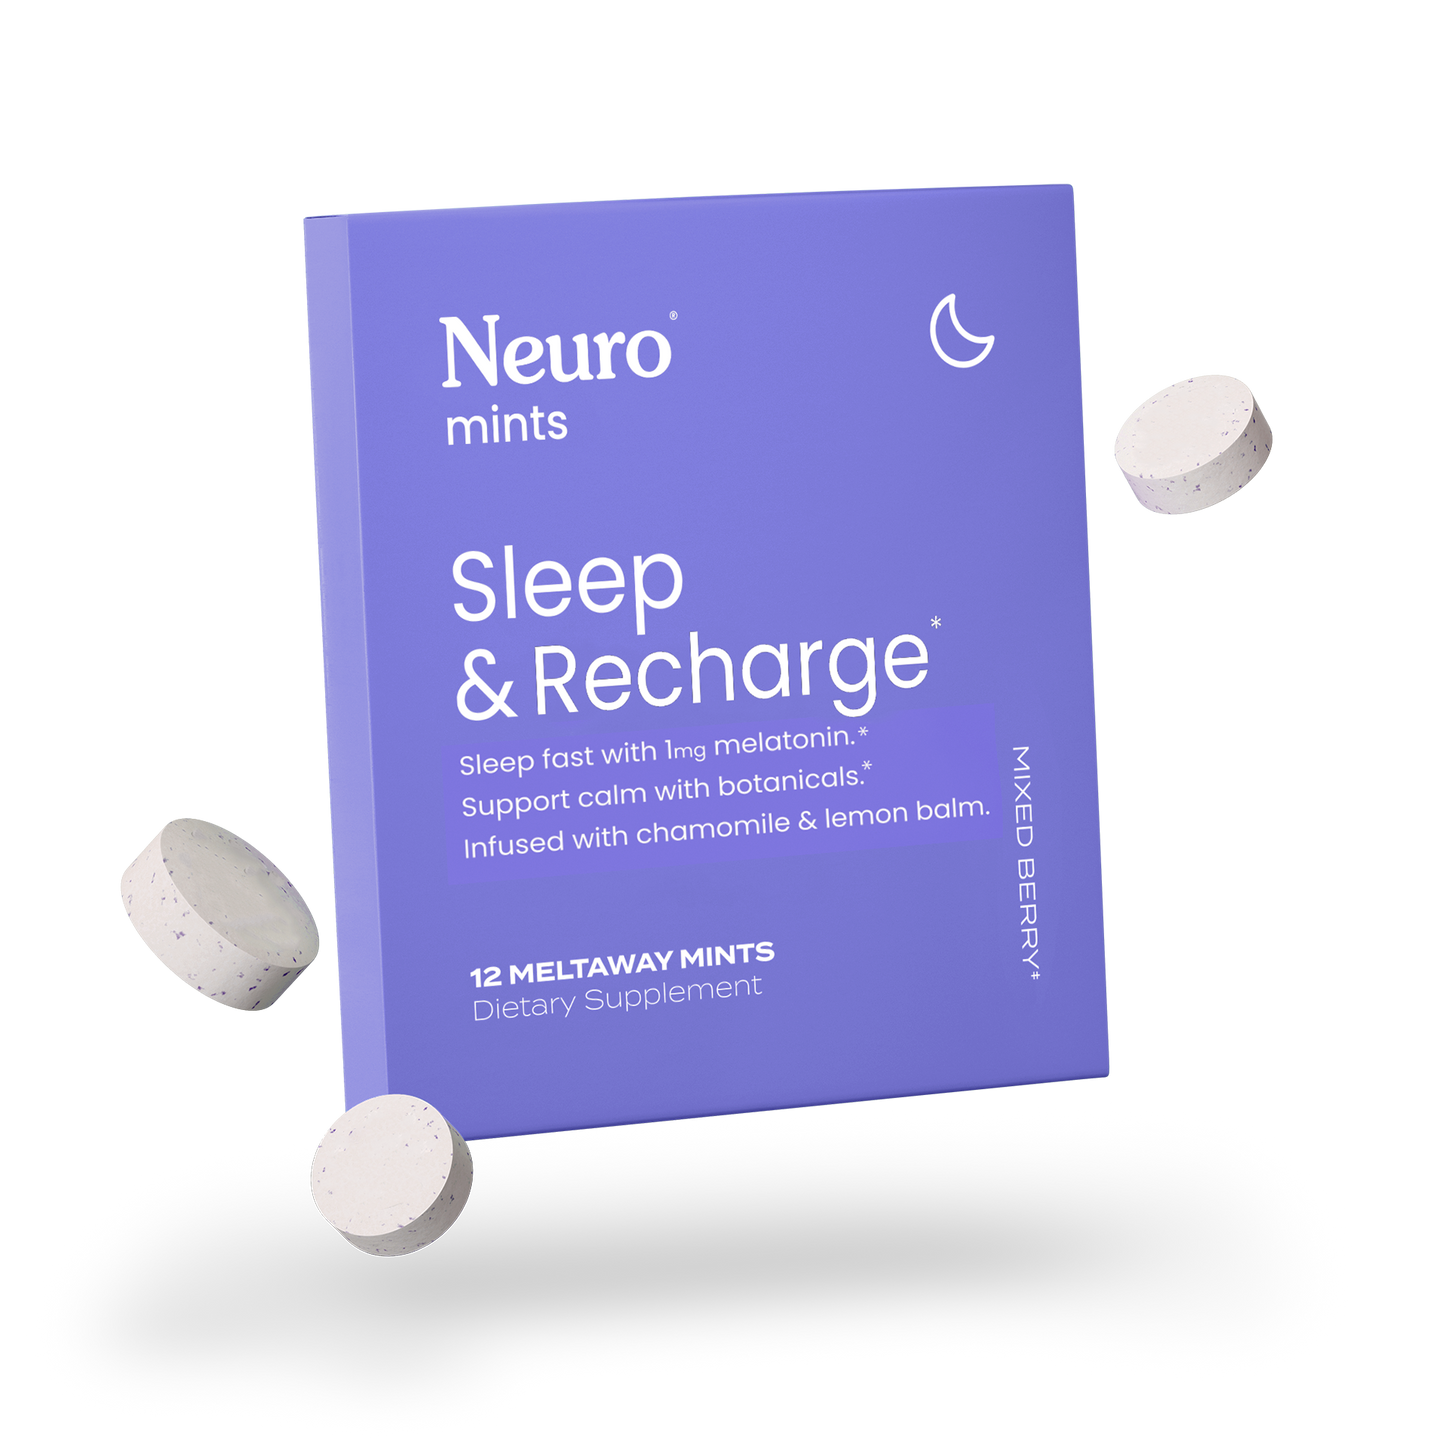 Neuro Sleep & Recharge Meltaway Mints